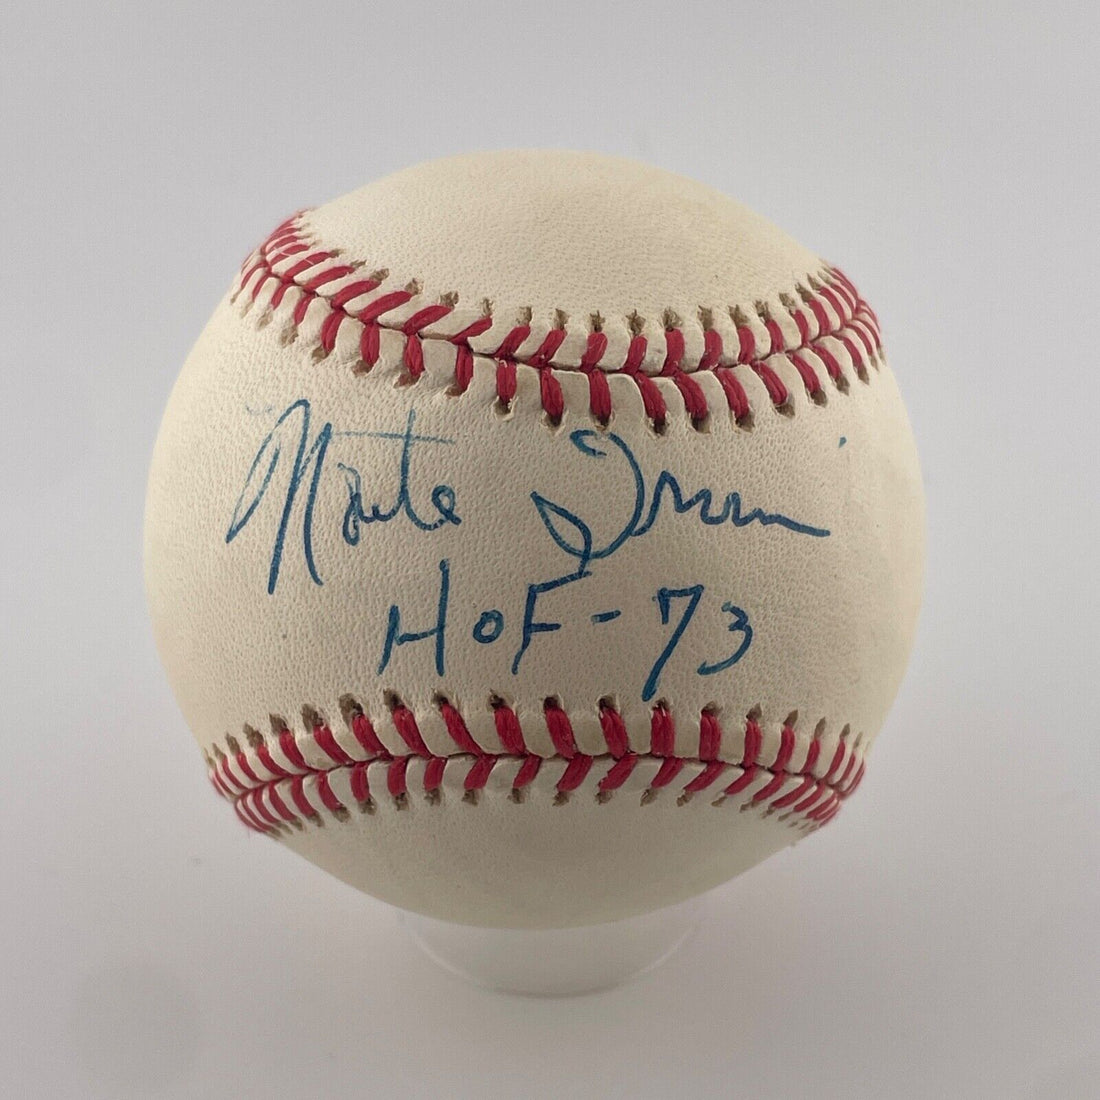 Monte Irvin Signed Inscribed Baseball. HOF - 73. JSA.